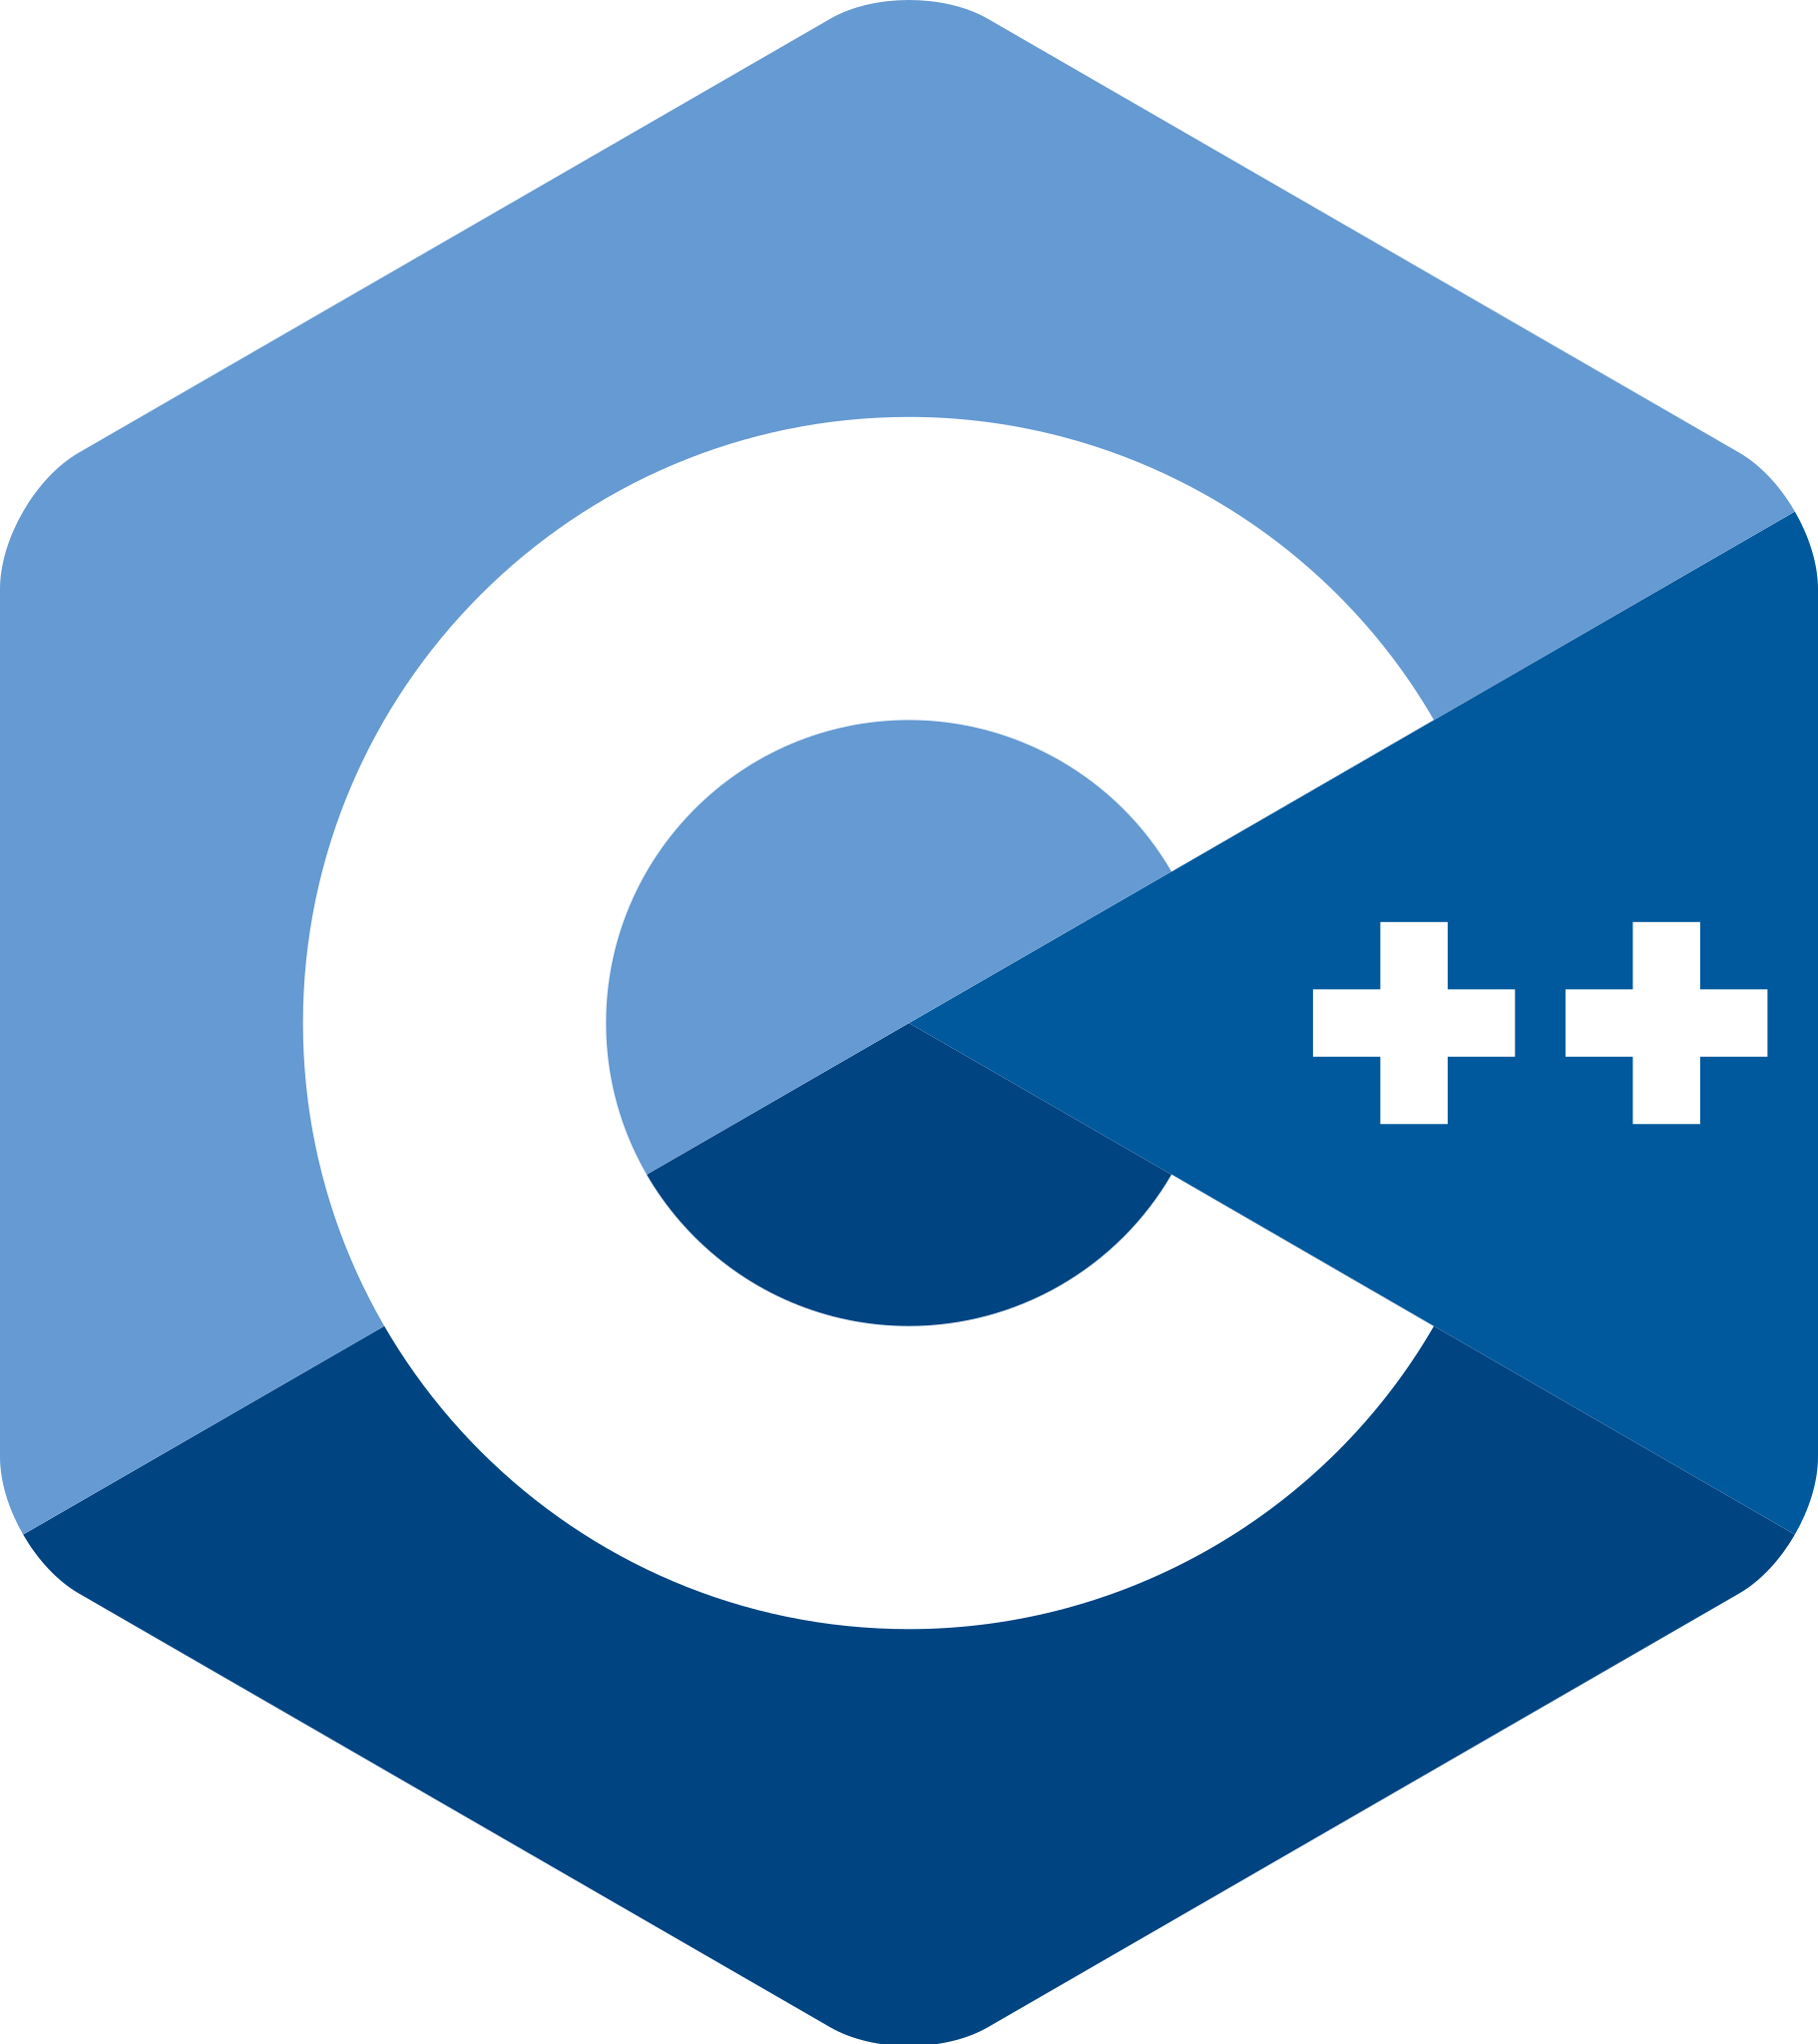 C++ Logo Image